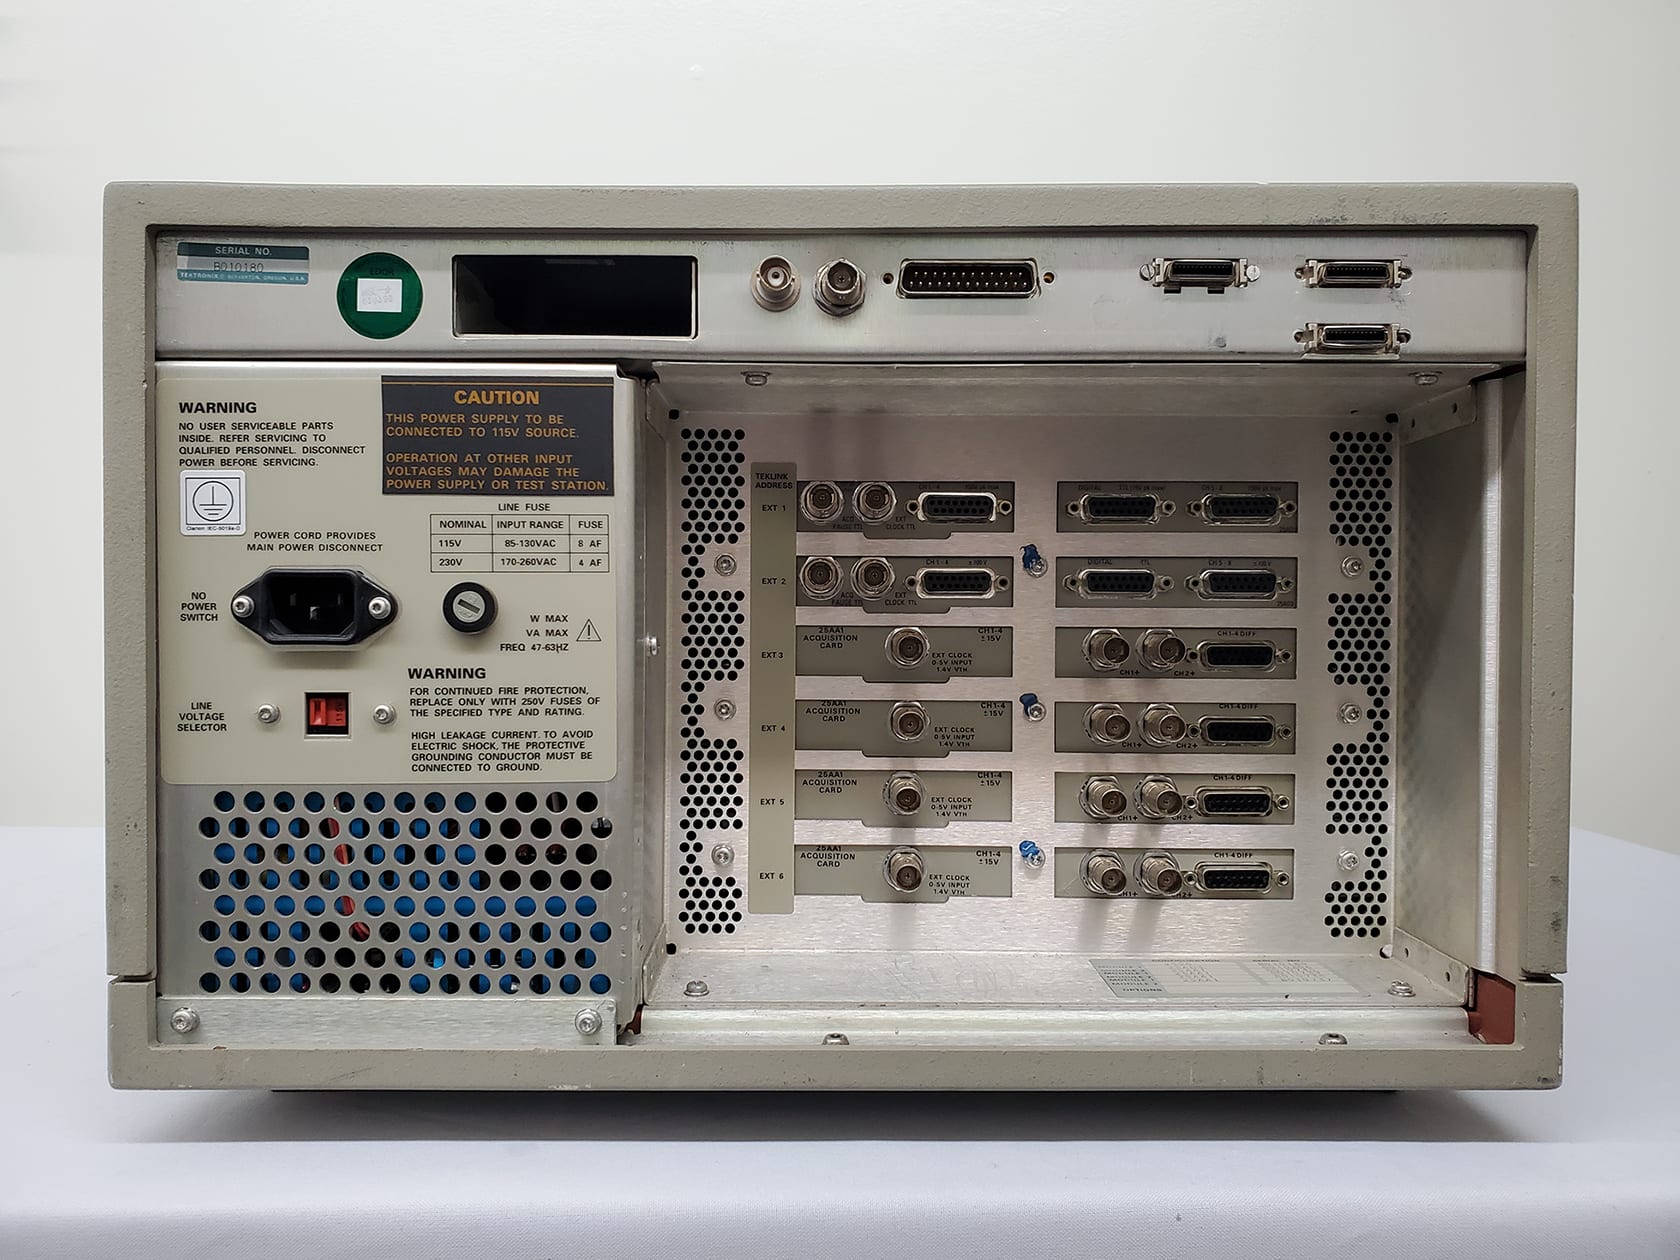 Buy Tektronix 2520 6 Slot Mainframe Test Lab Multi-Channel Wave Analyzer -59990 Online